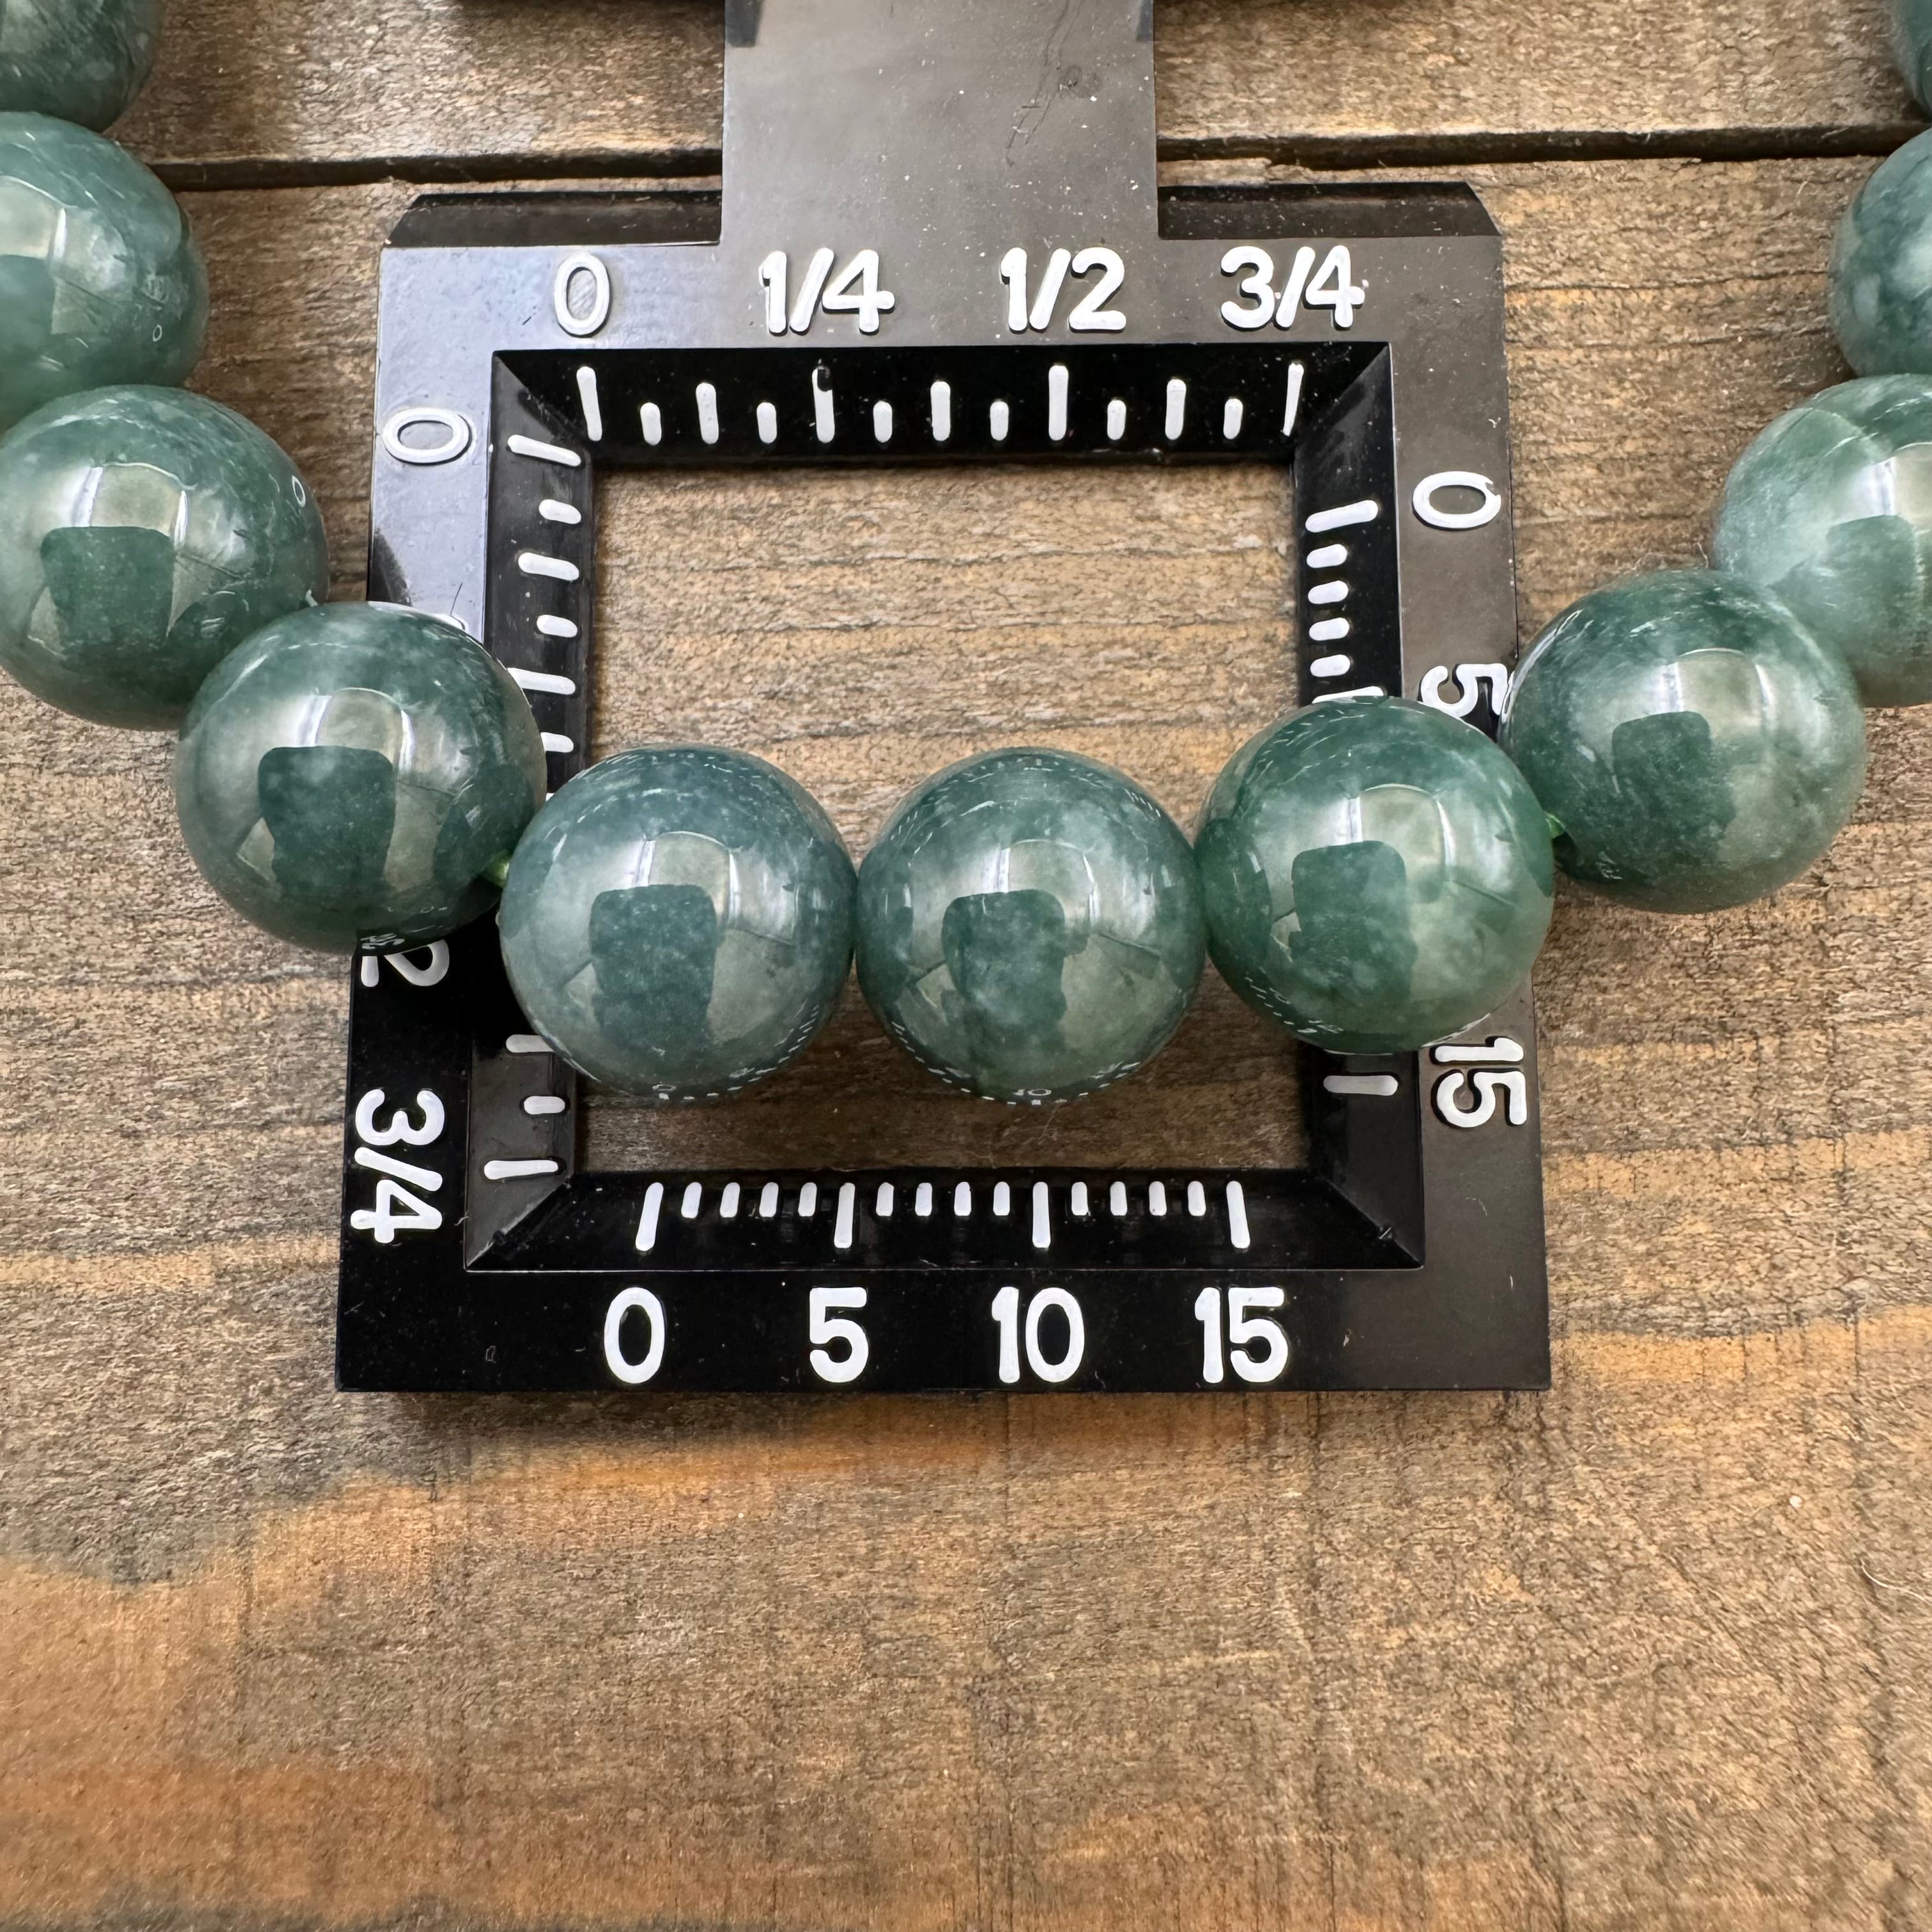 Mayan Blue Jade Bracelet